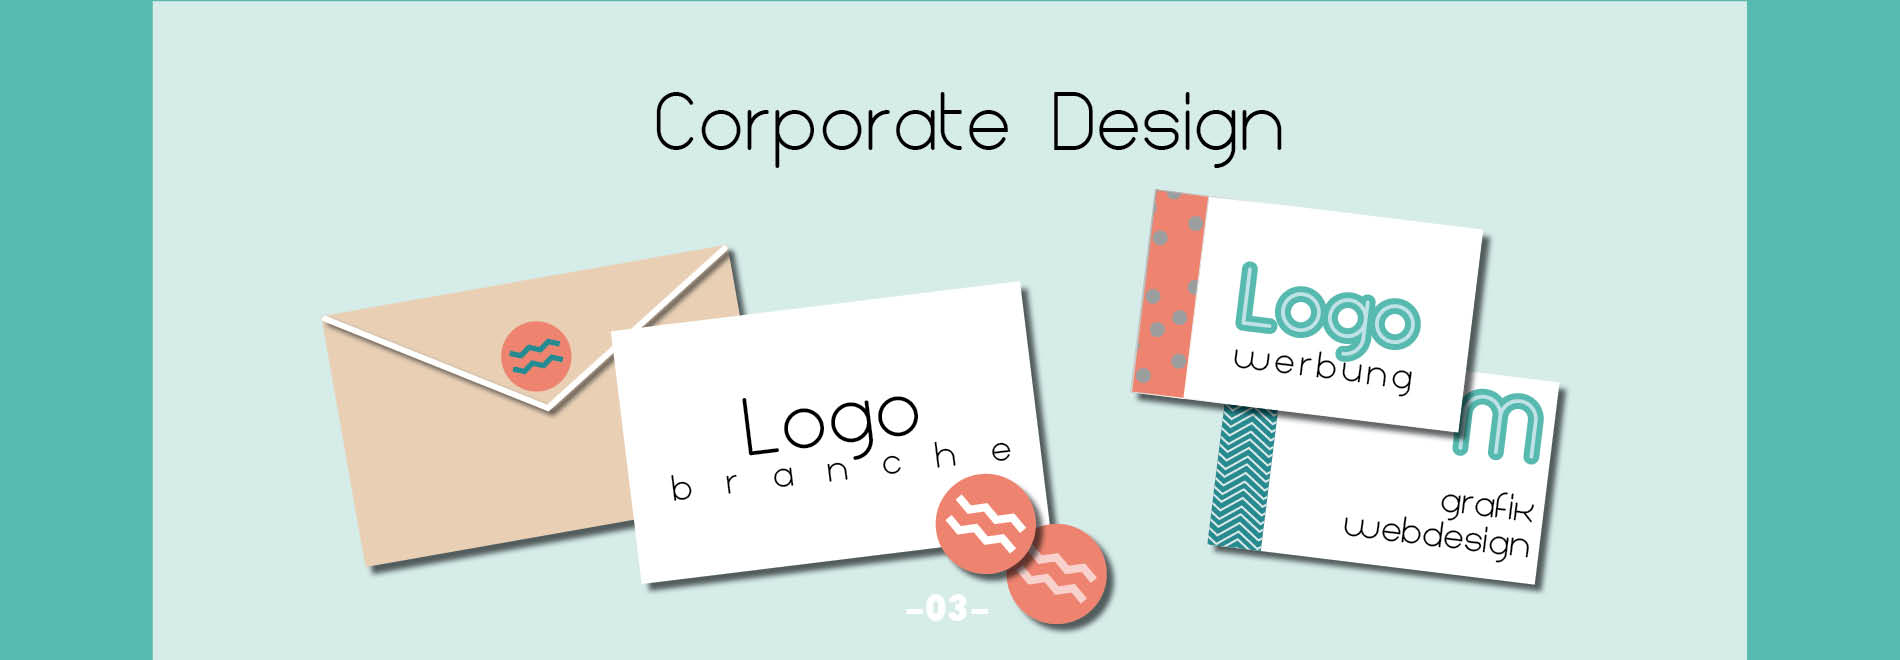 013_Corporate_Design.jpg